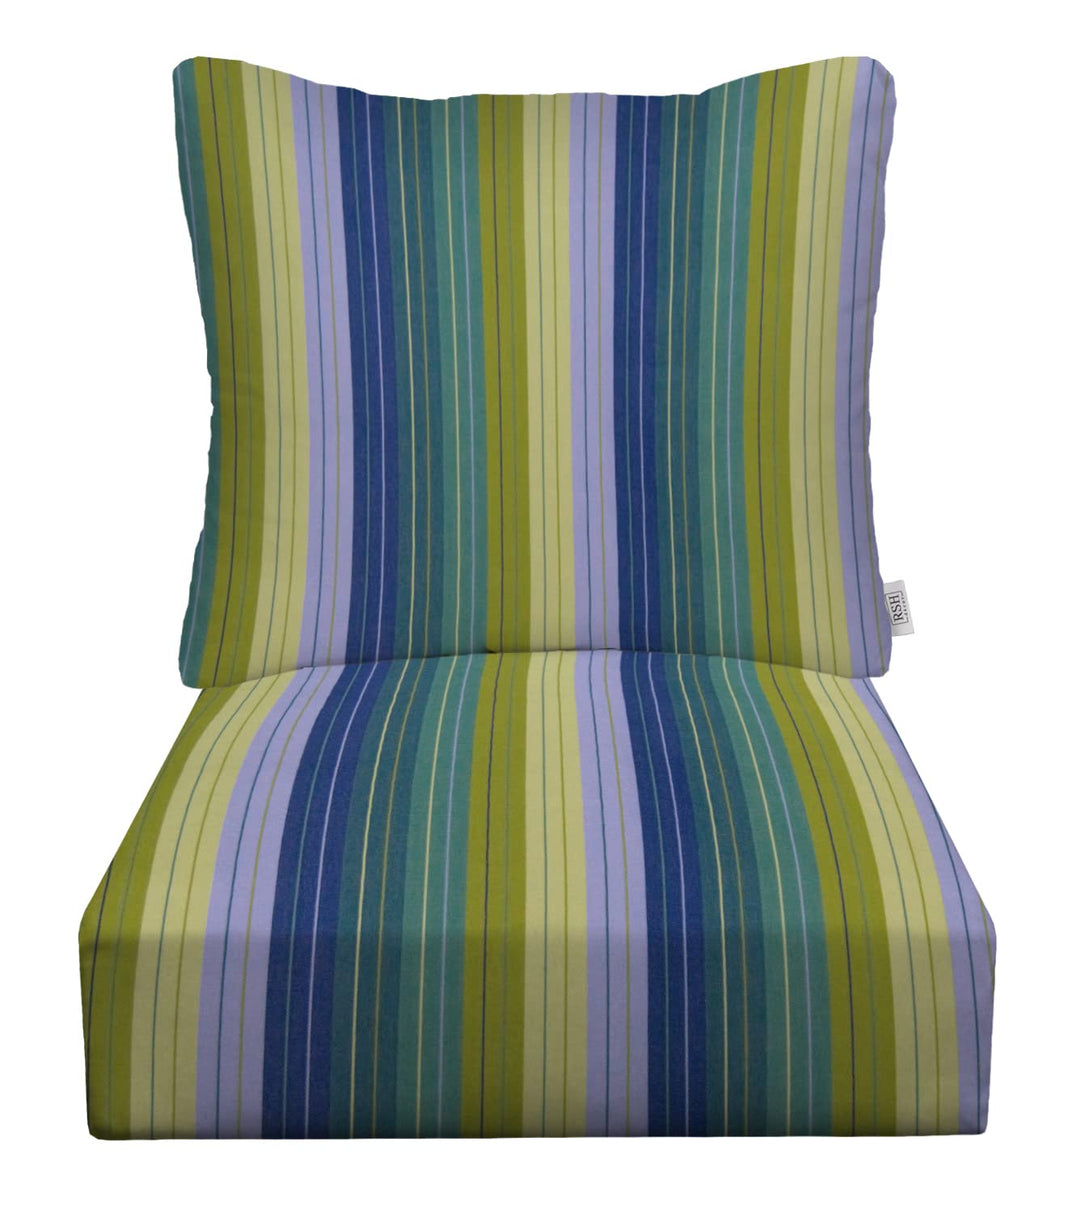 Rsh dcor Indoor Outdoor Sunbrella Deep Seating Cushion Set, 23x 24 x 5 Seat and 24 x 19 Back, Astoria Sunset, Yellow